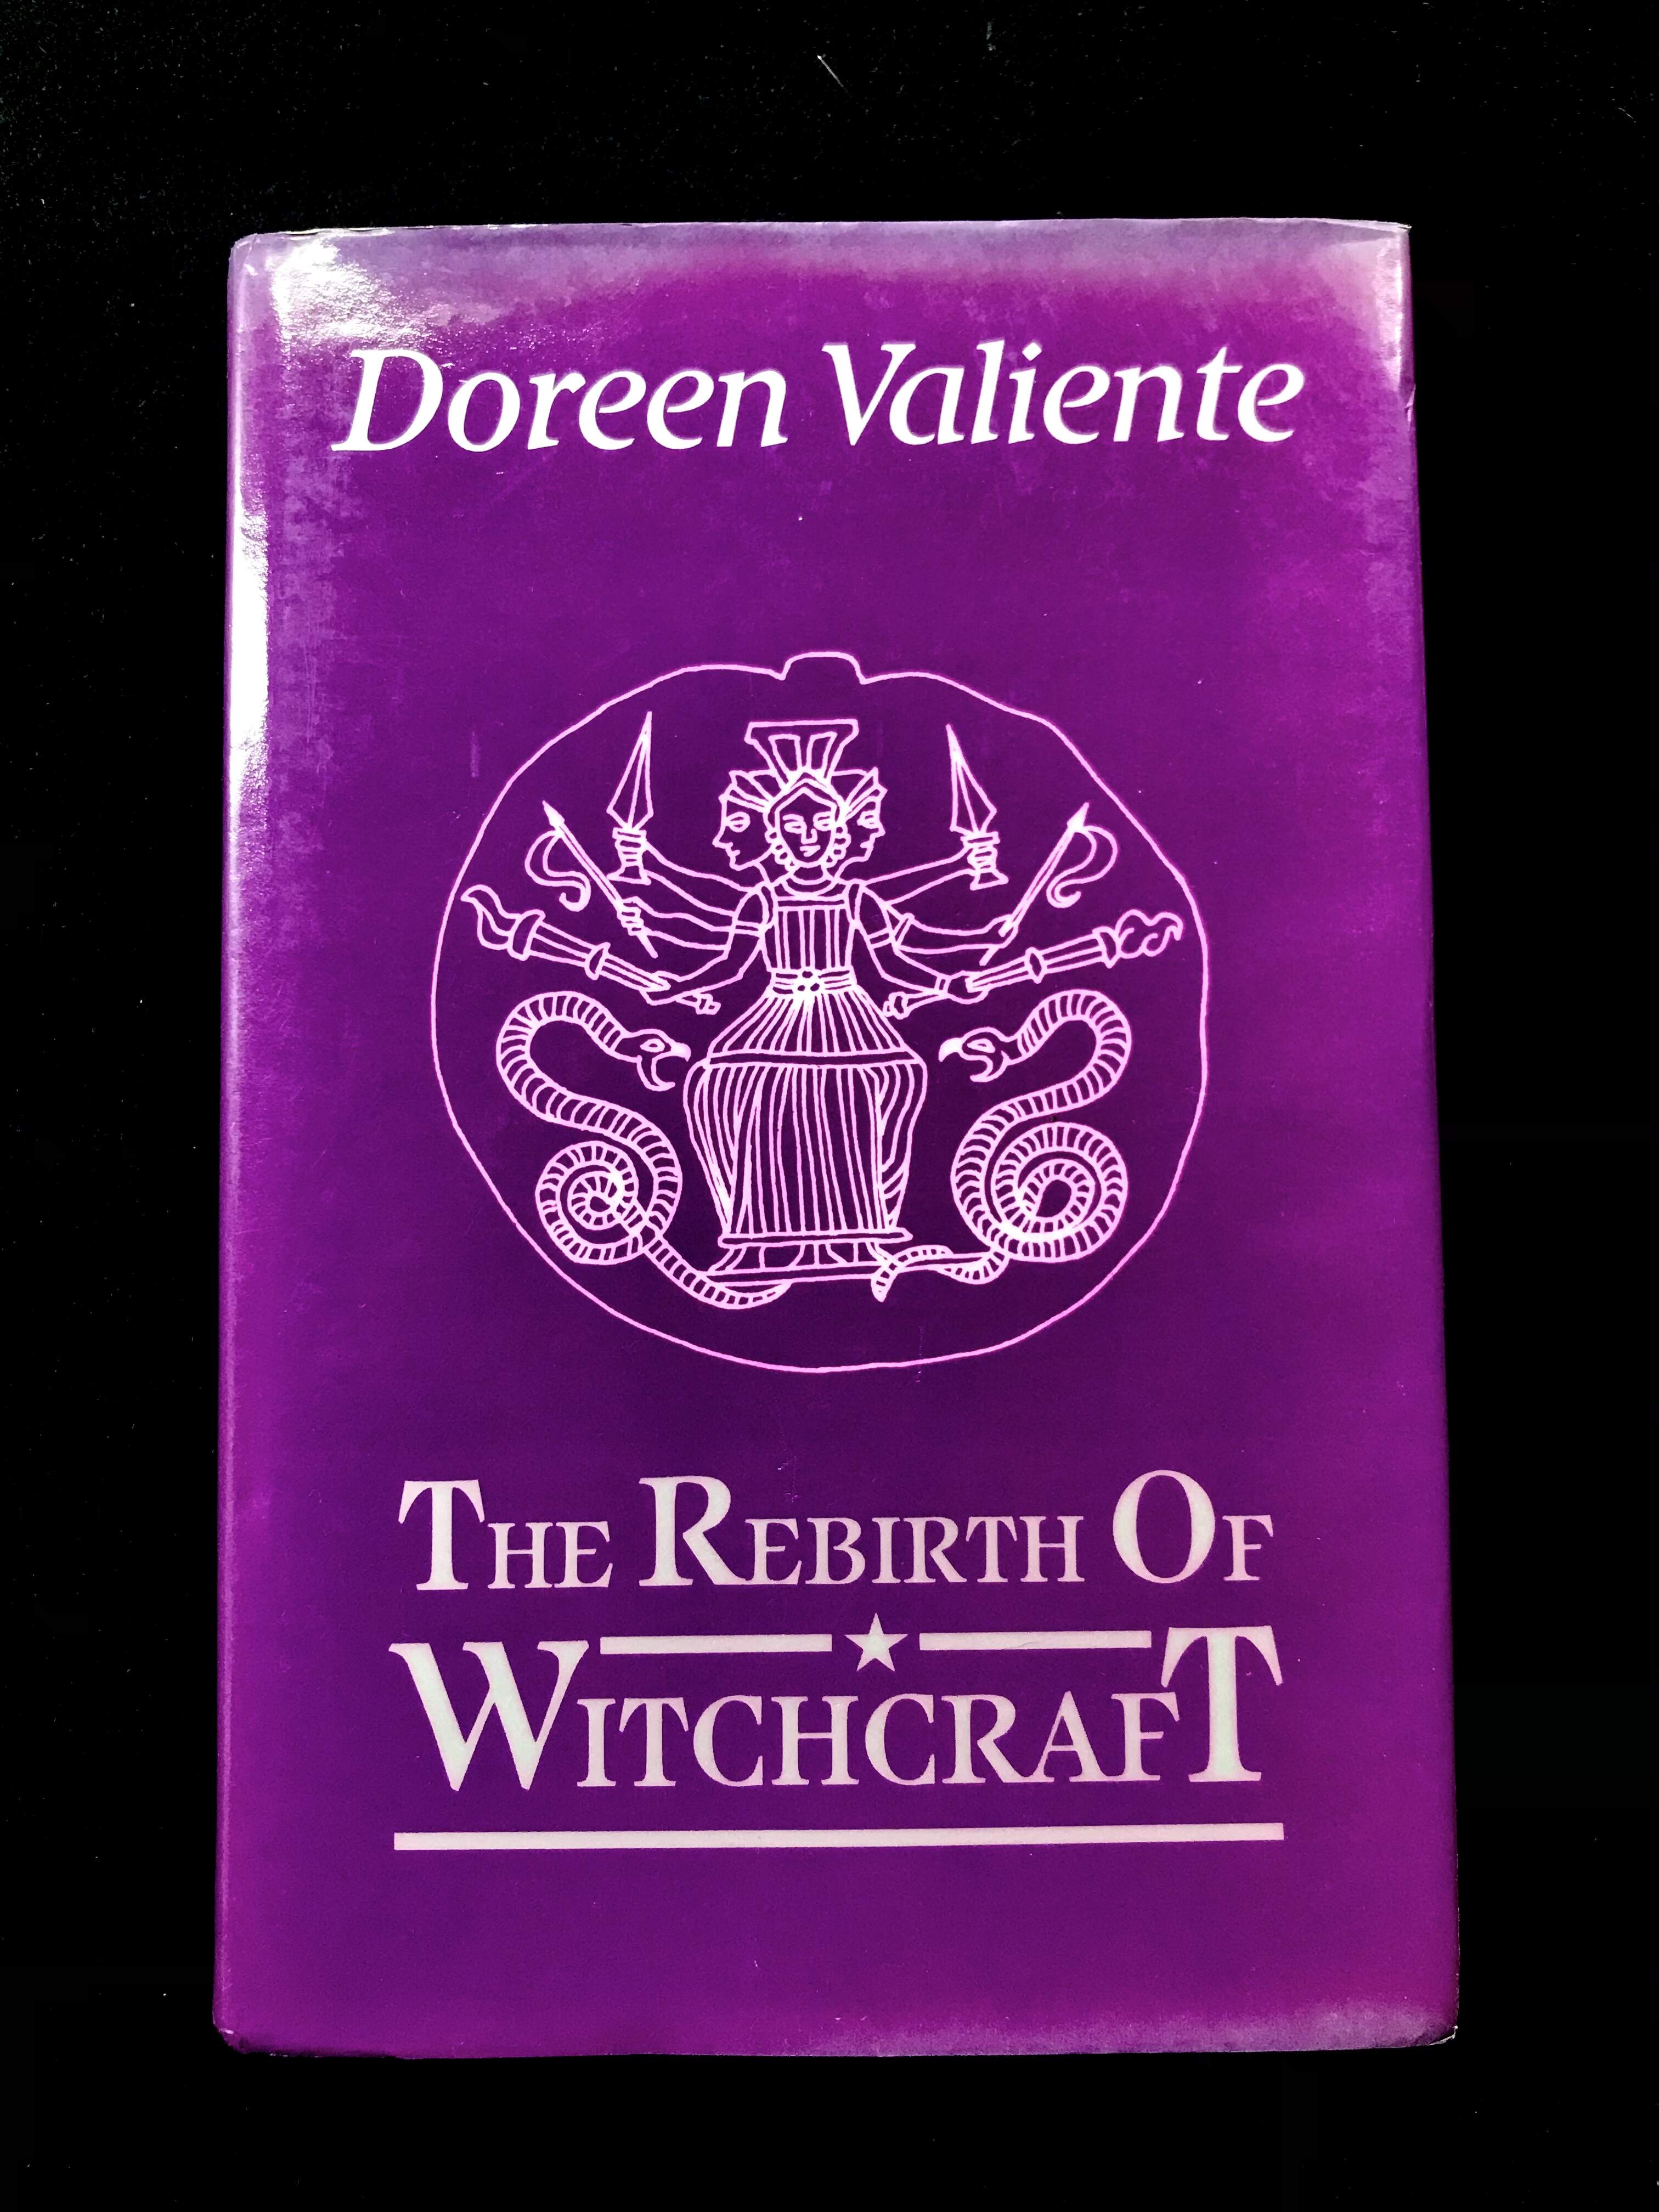 The Rebirth of Witchcraft by Doreen Valiente